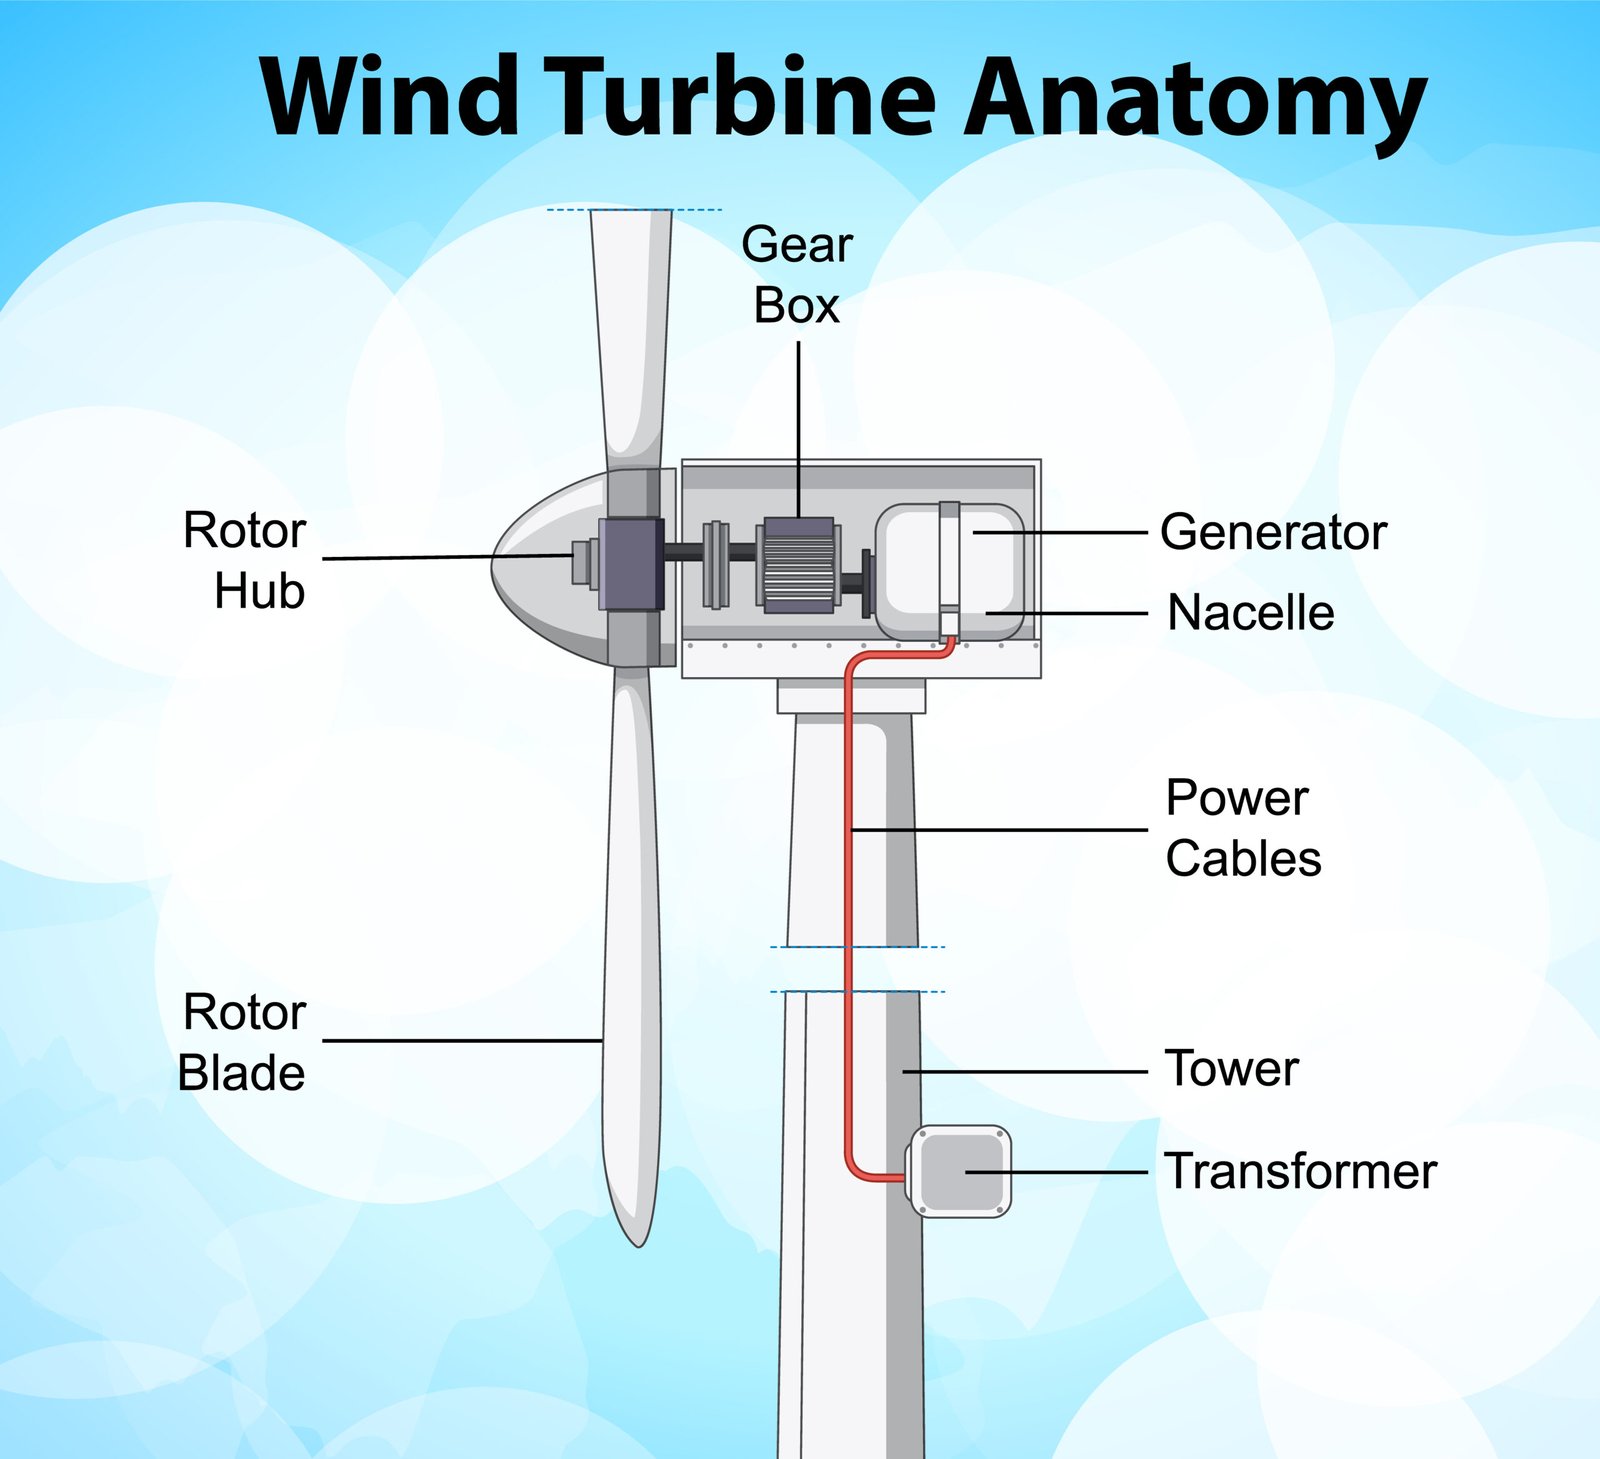 Diagram of wind turbine anatomy